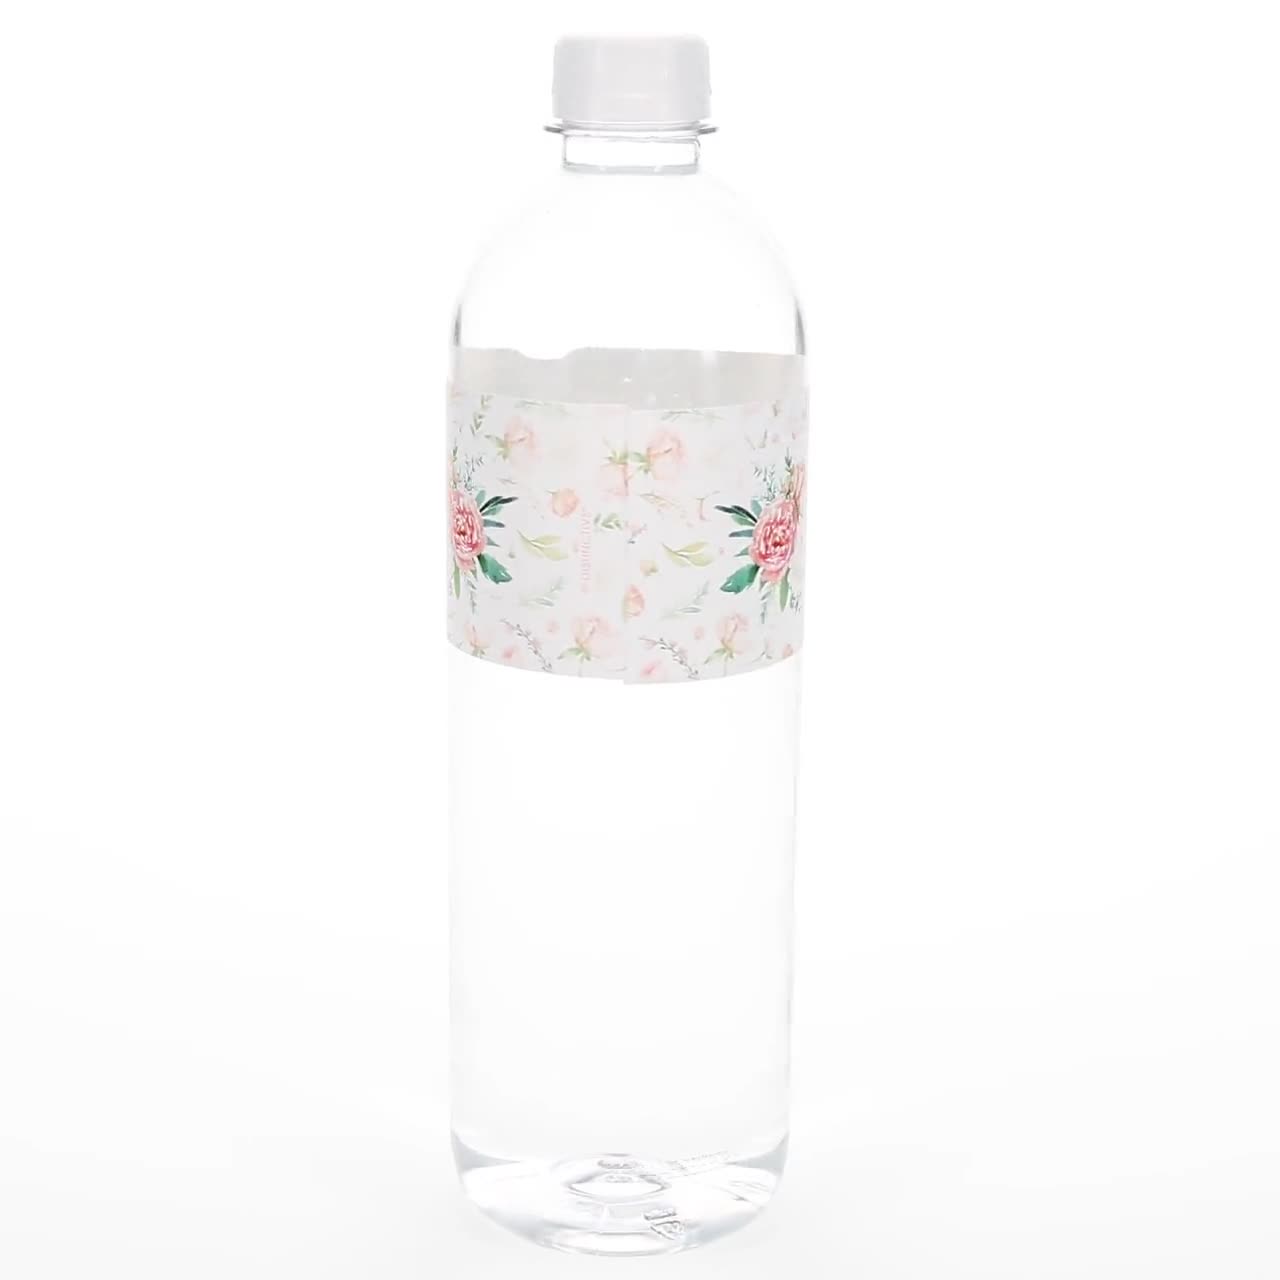 New Greenery Oh Baby Gender Neutral Waterproof Water Bottle Labels 24 Pack  8x2